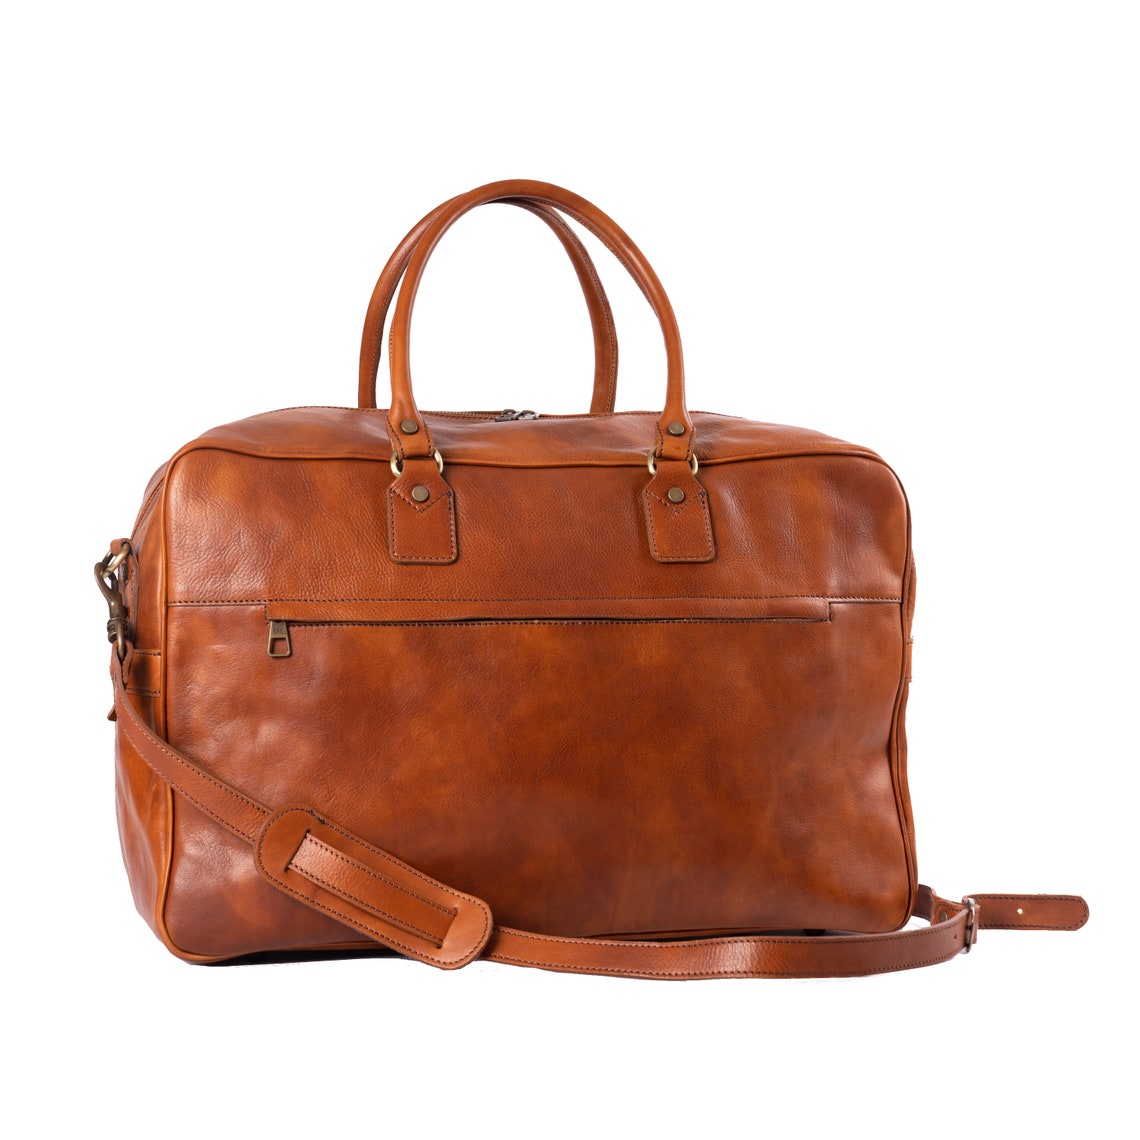 Da Vinci Weekend Bag in Real Leather | Etsy